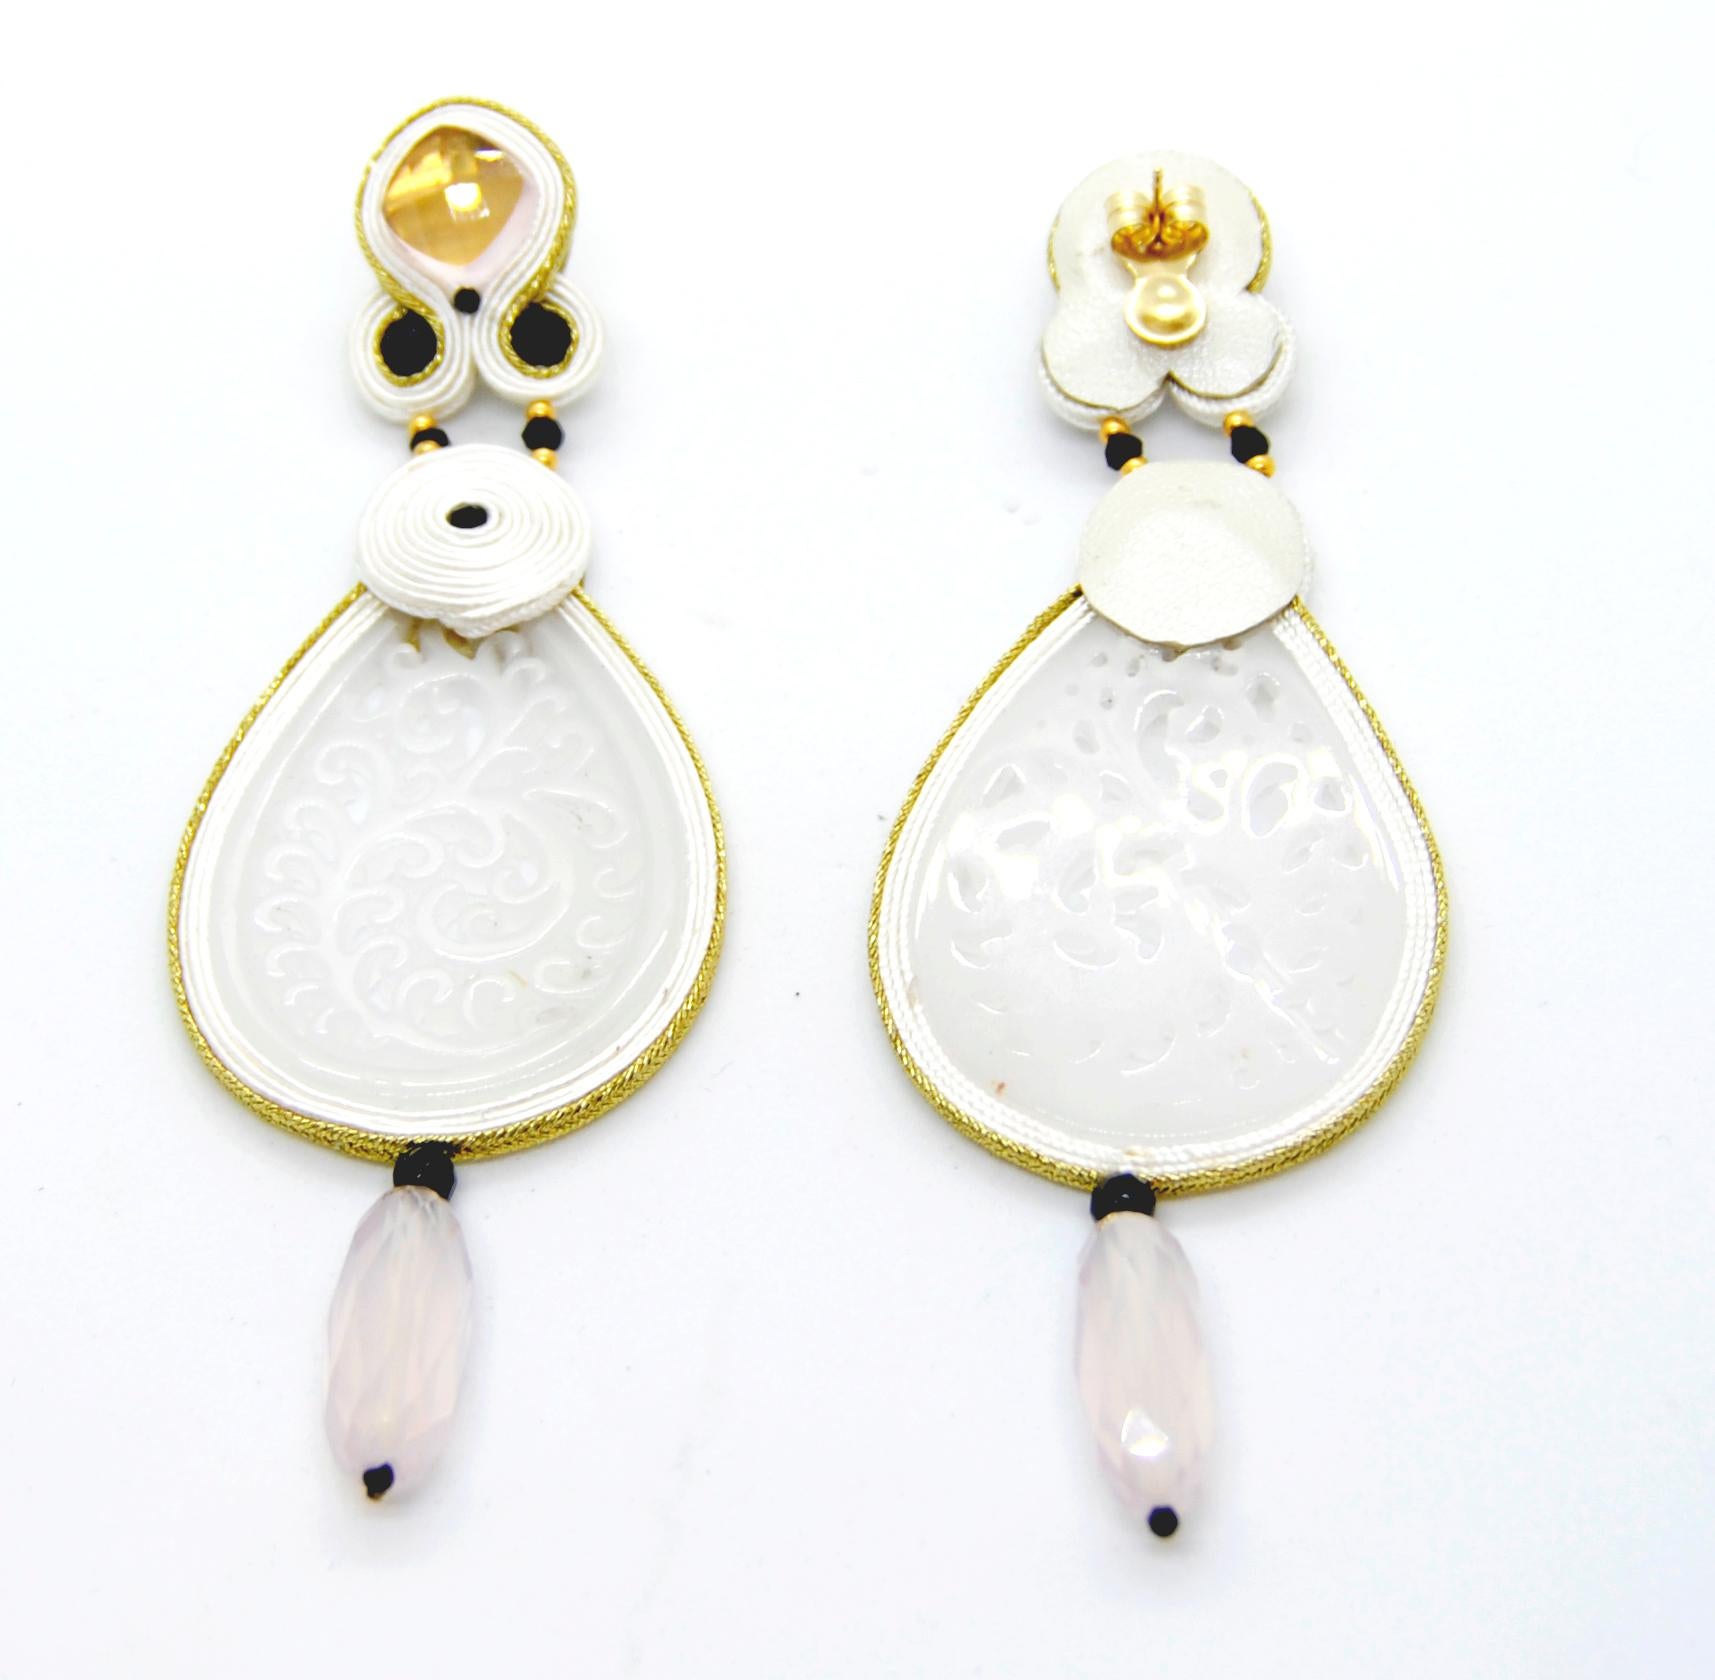 Contemporary White Quartz Monokrome Collection 9 Carat Gold Earrings